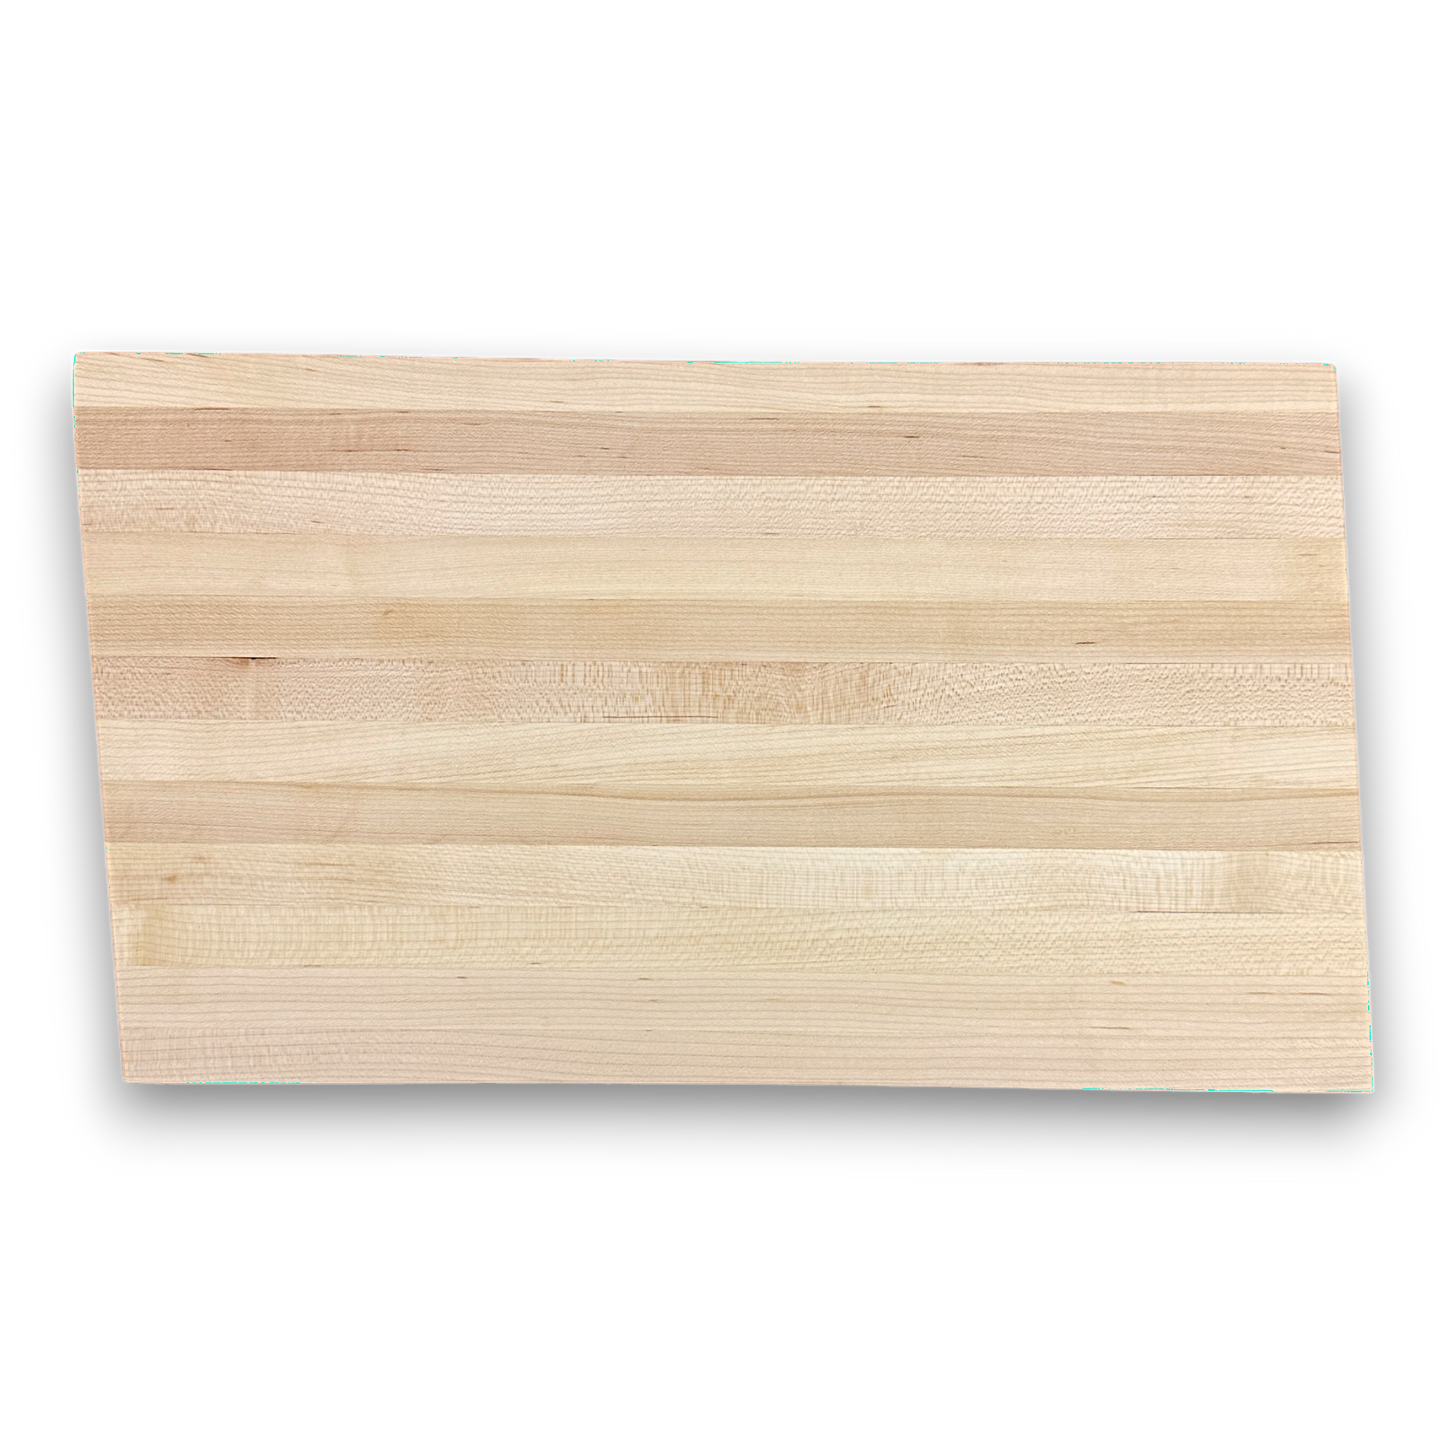 2" Mapley Wood Z-shaped cutting board - BOISWOOD